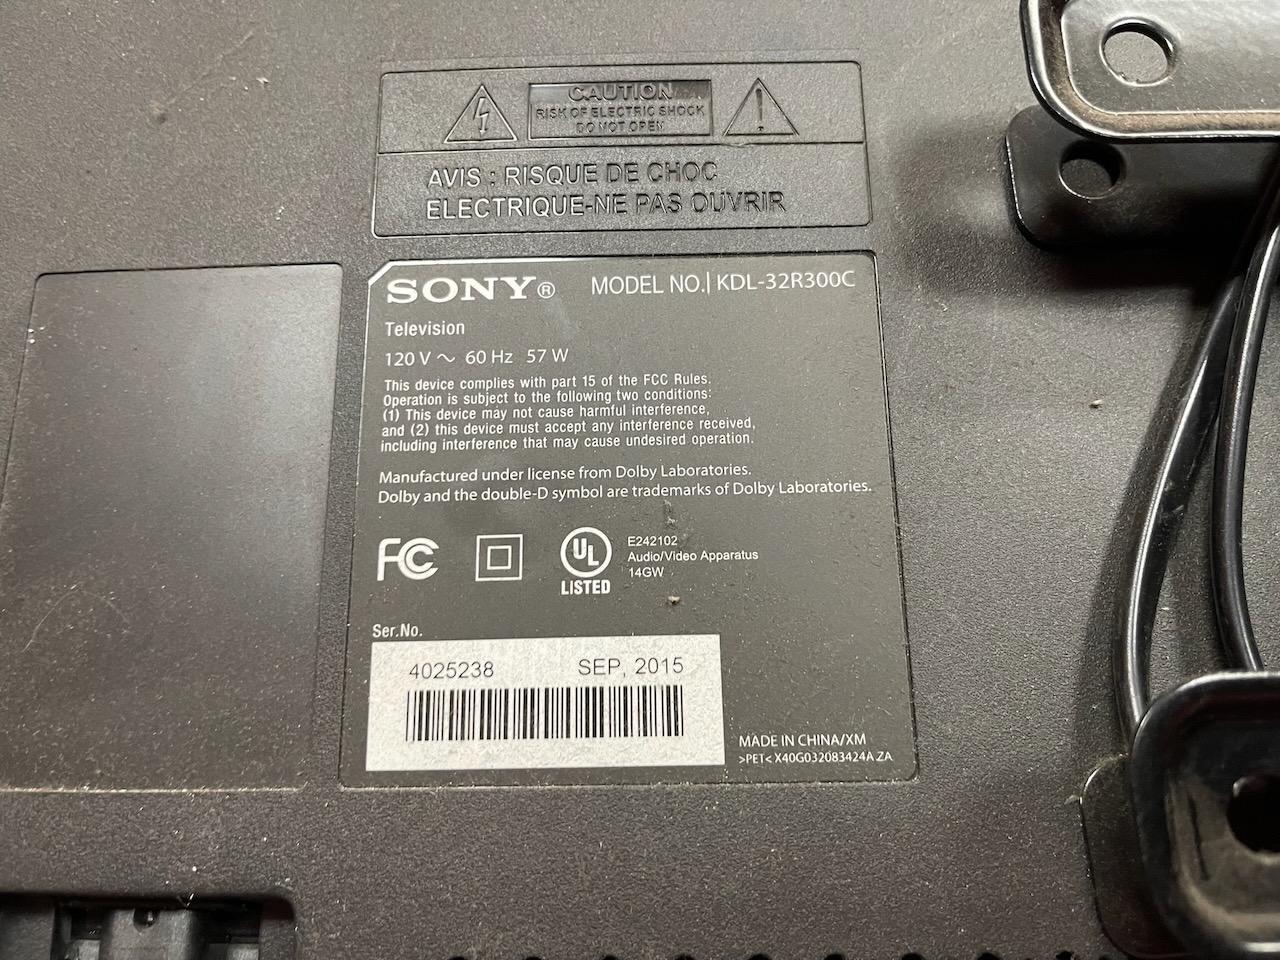 TVs - Sanyo 32", Sony 32", Vizio 50", Vizio 39"